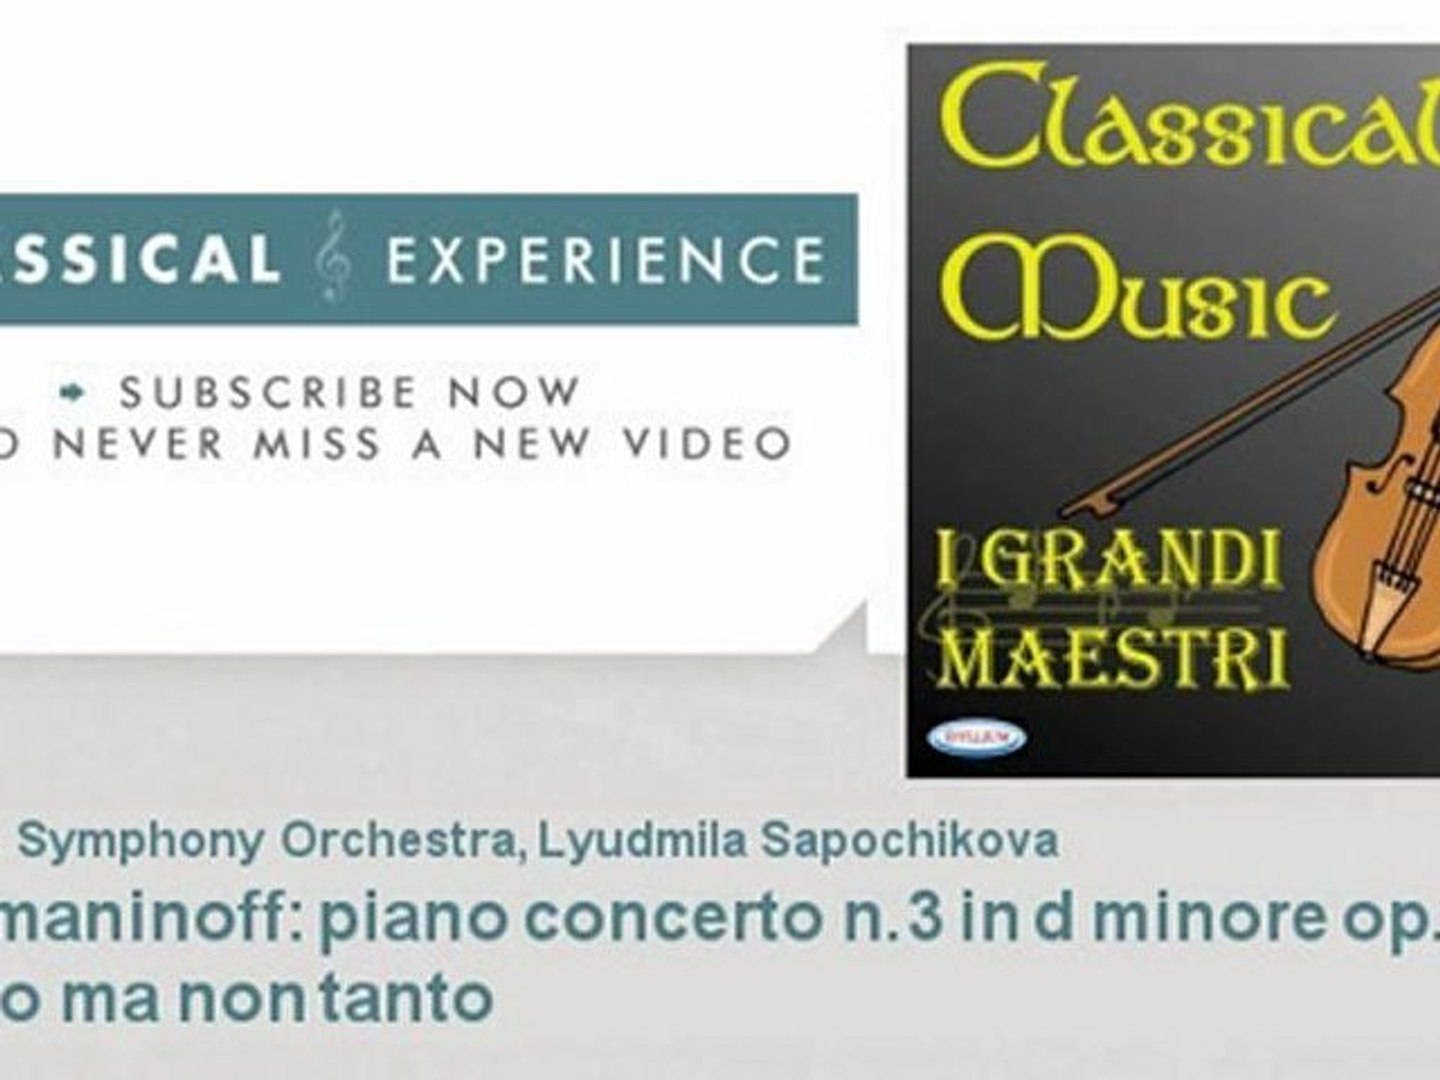 Sergei Rachmaninoff : Rachmaninoff: piano concerto n.3 in d minore op.30,  allegro ma non tanto - Vidéo Dailymotion